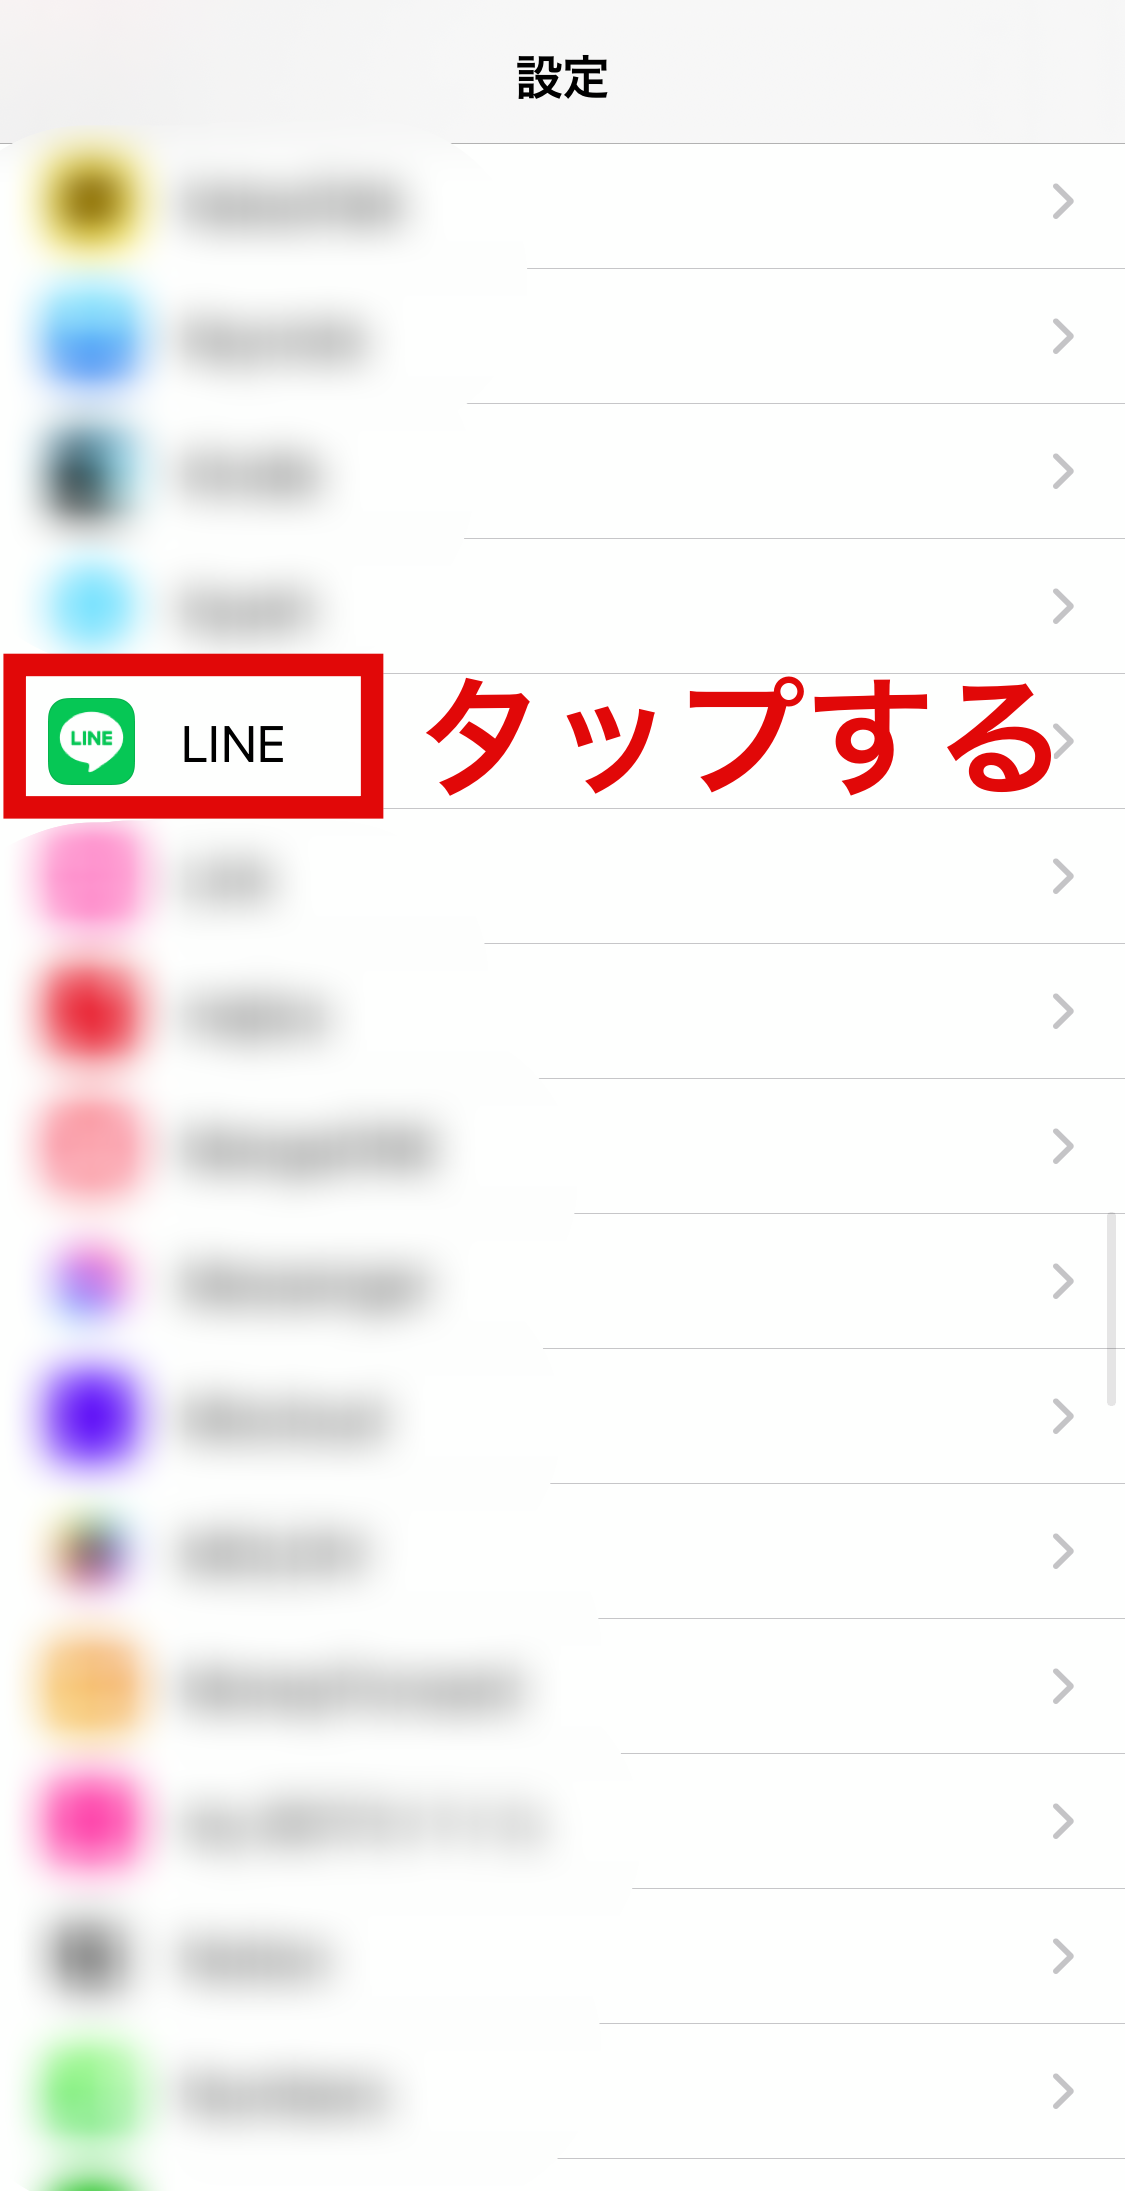 Line ライン で写真 画像が送れないときの原因と対処法 Iphone Android Appliv Topics